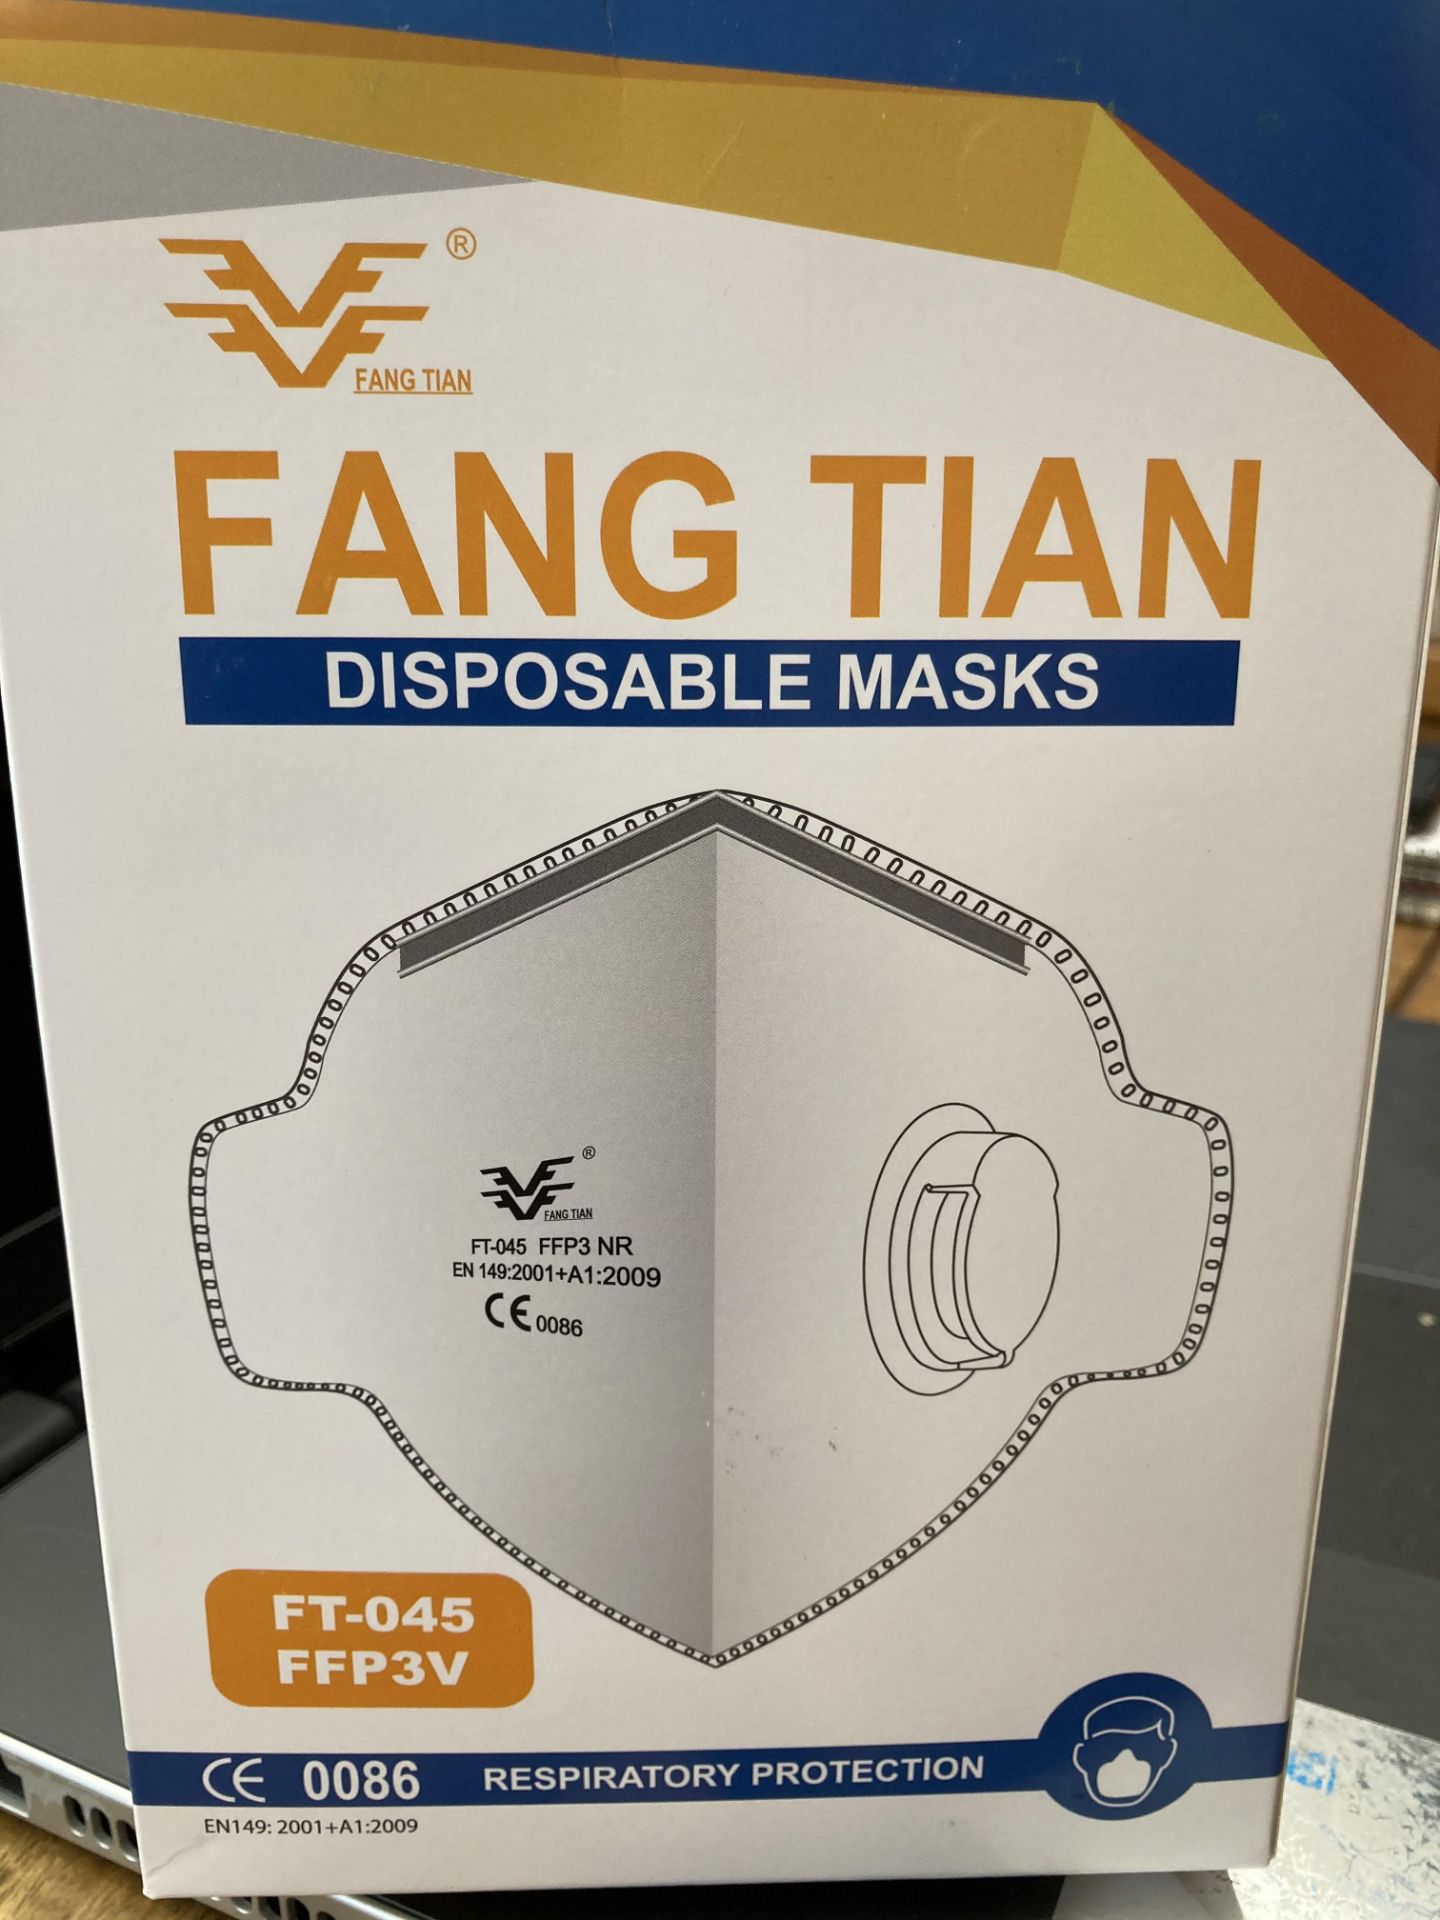 FFP 3 respirator, fold flat, face mask X 100 Masks - Image 3 of 3